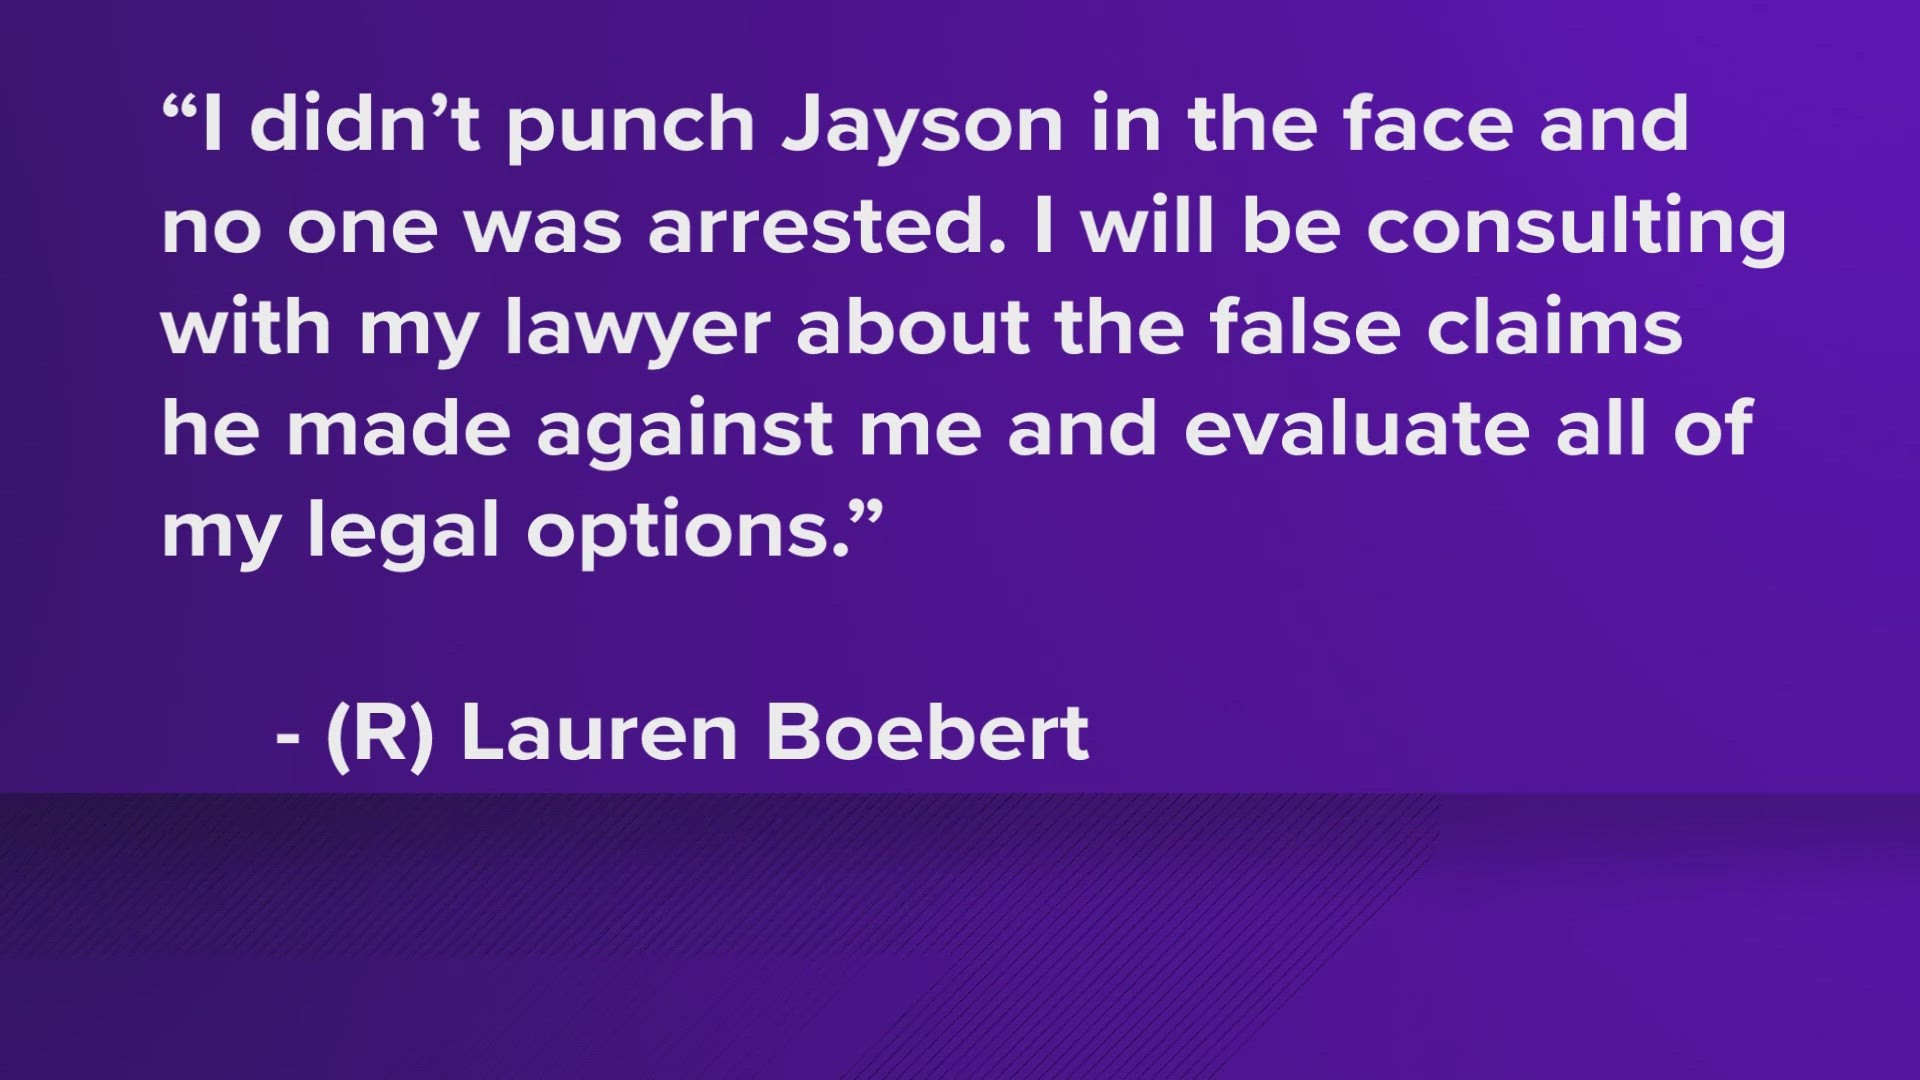 Silt police respond to incident involving Lauren Boebert and ex-husband ...